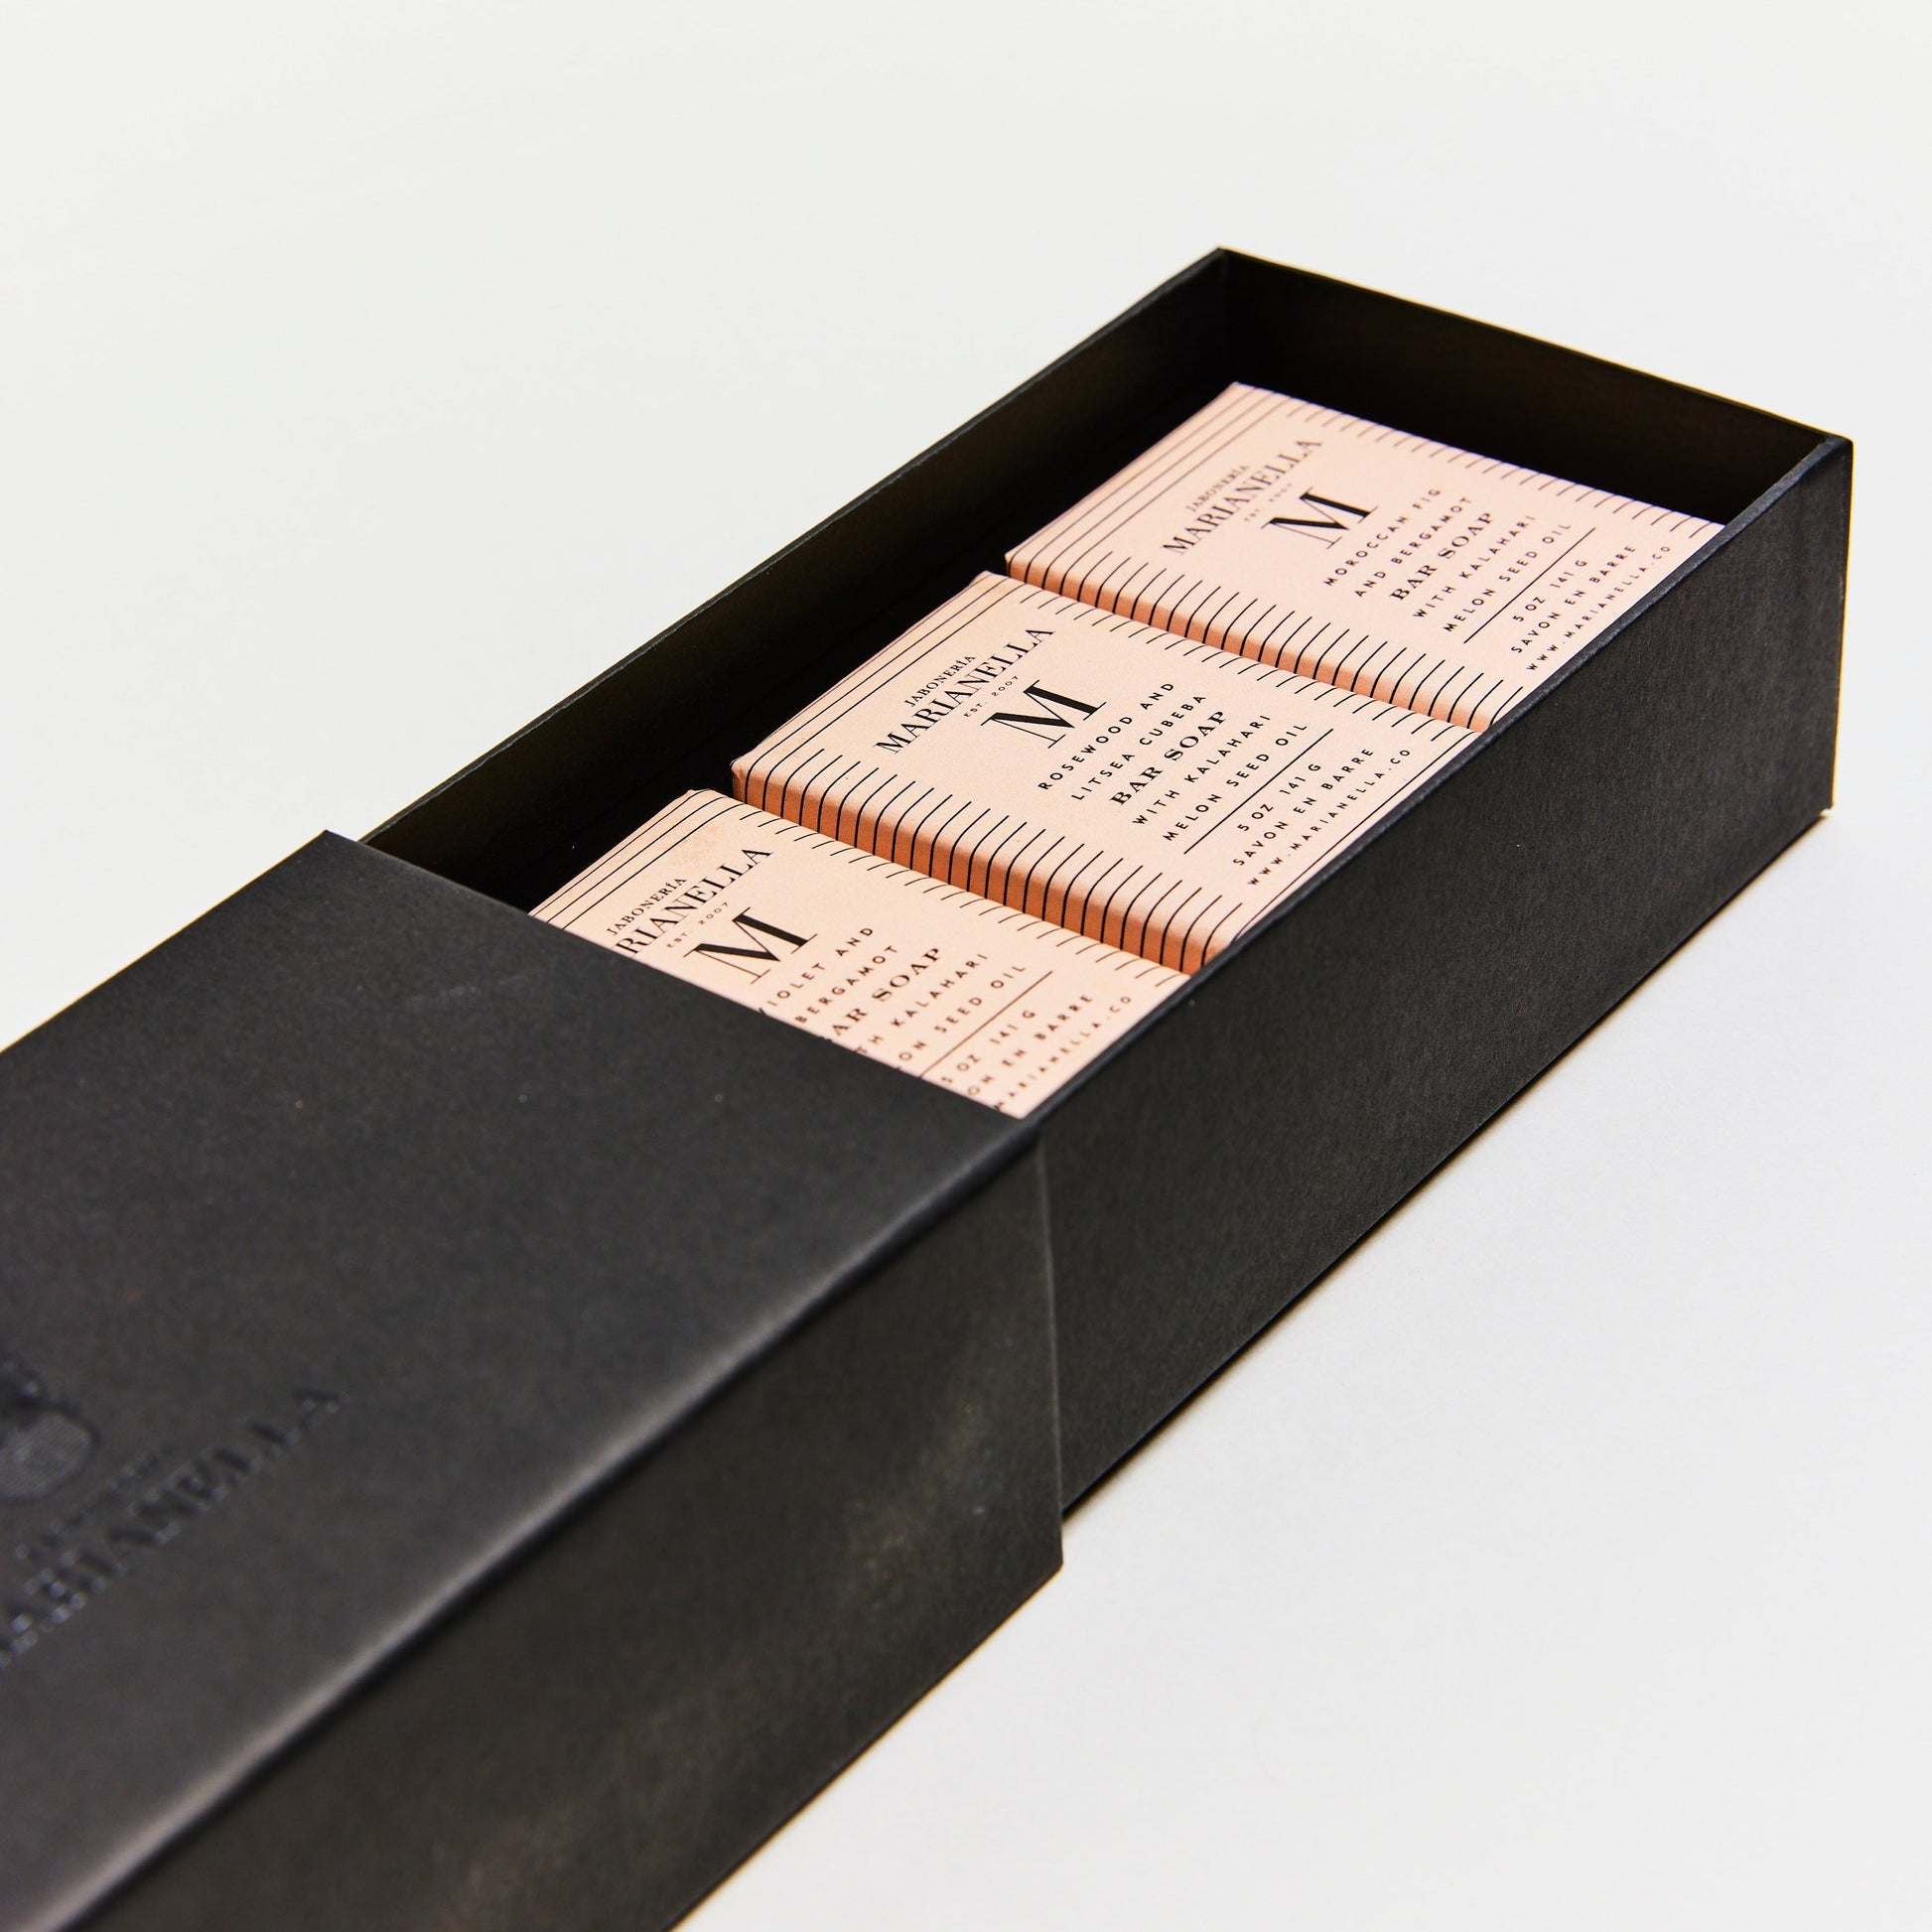 Marianella Three Soap Luxury Gift Box